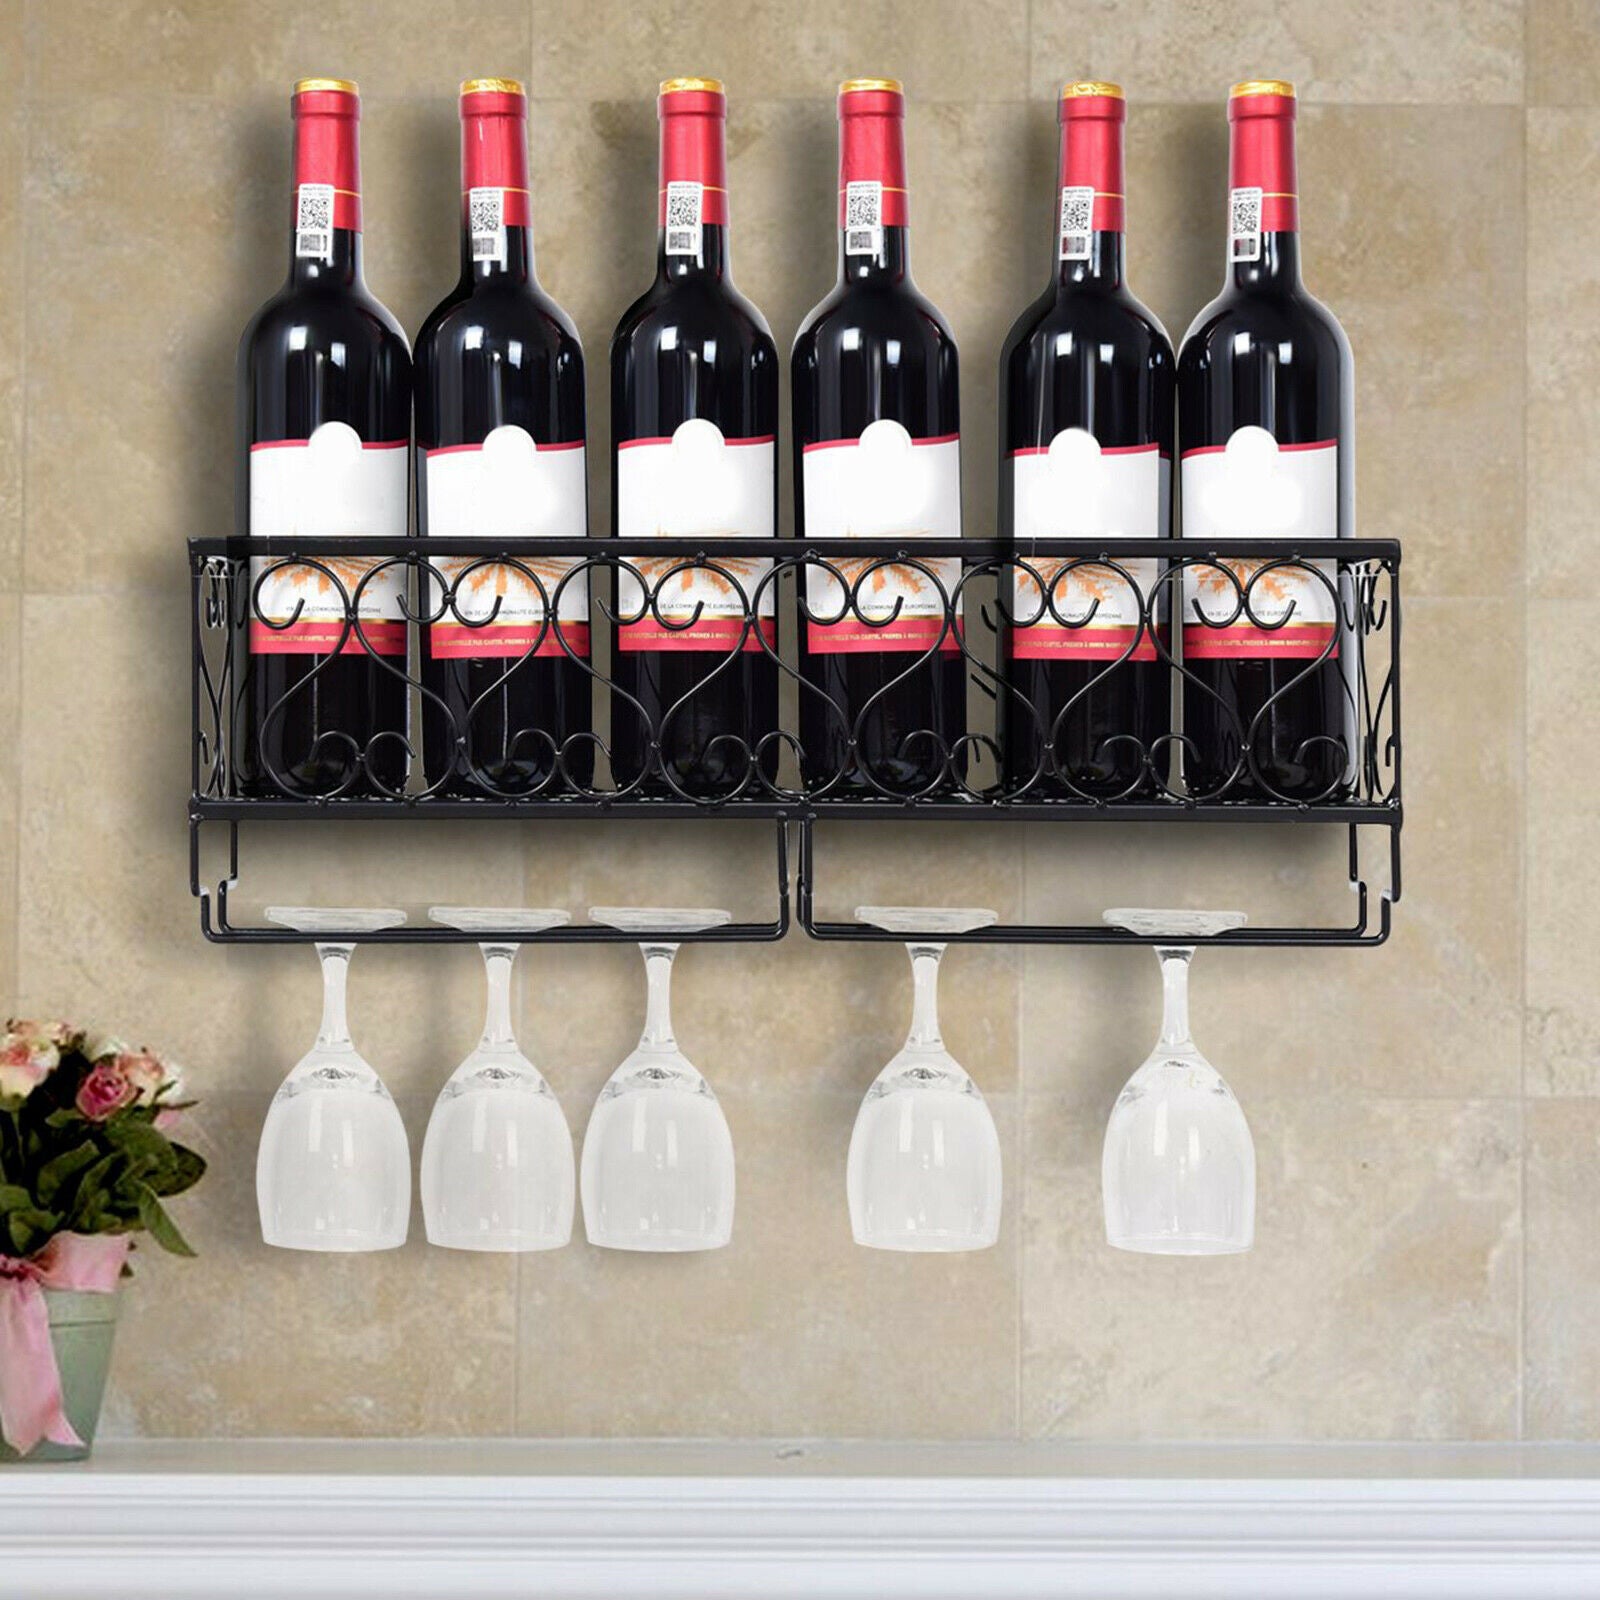 Wall Shelf Iron Wine Racks Wall Mounted Stemware Racks Bottle Display Holder